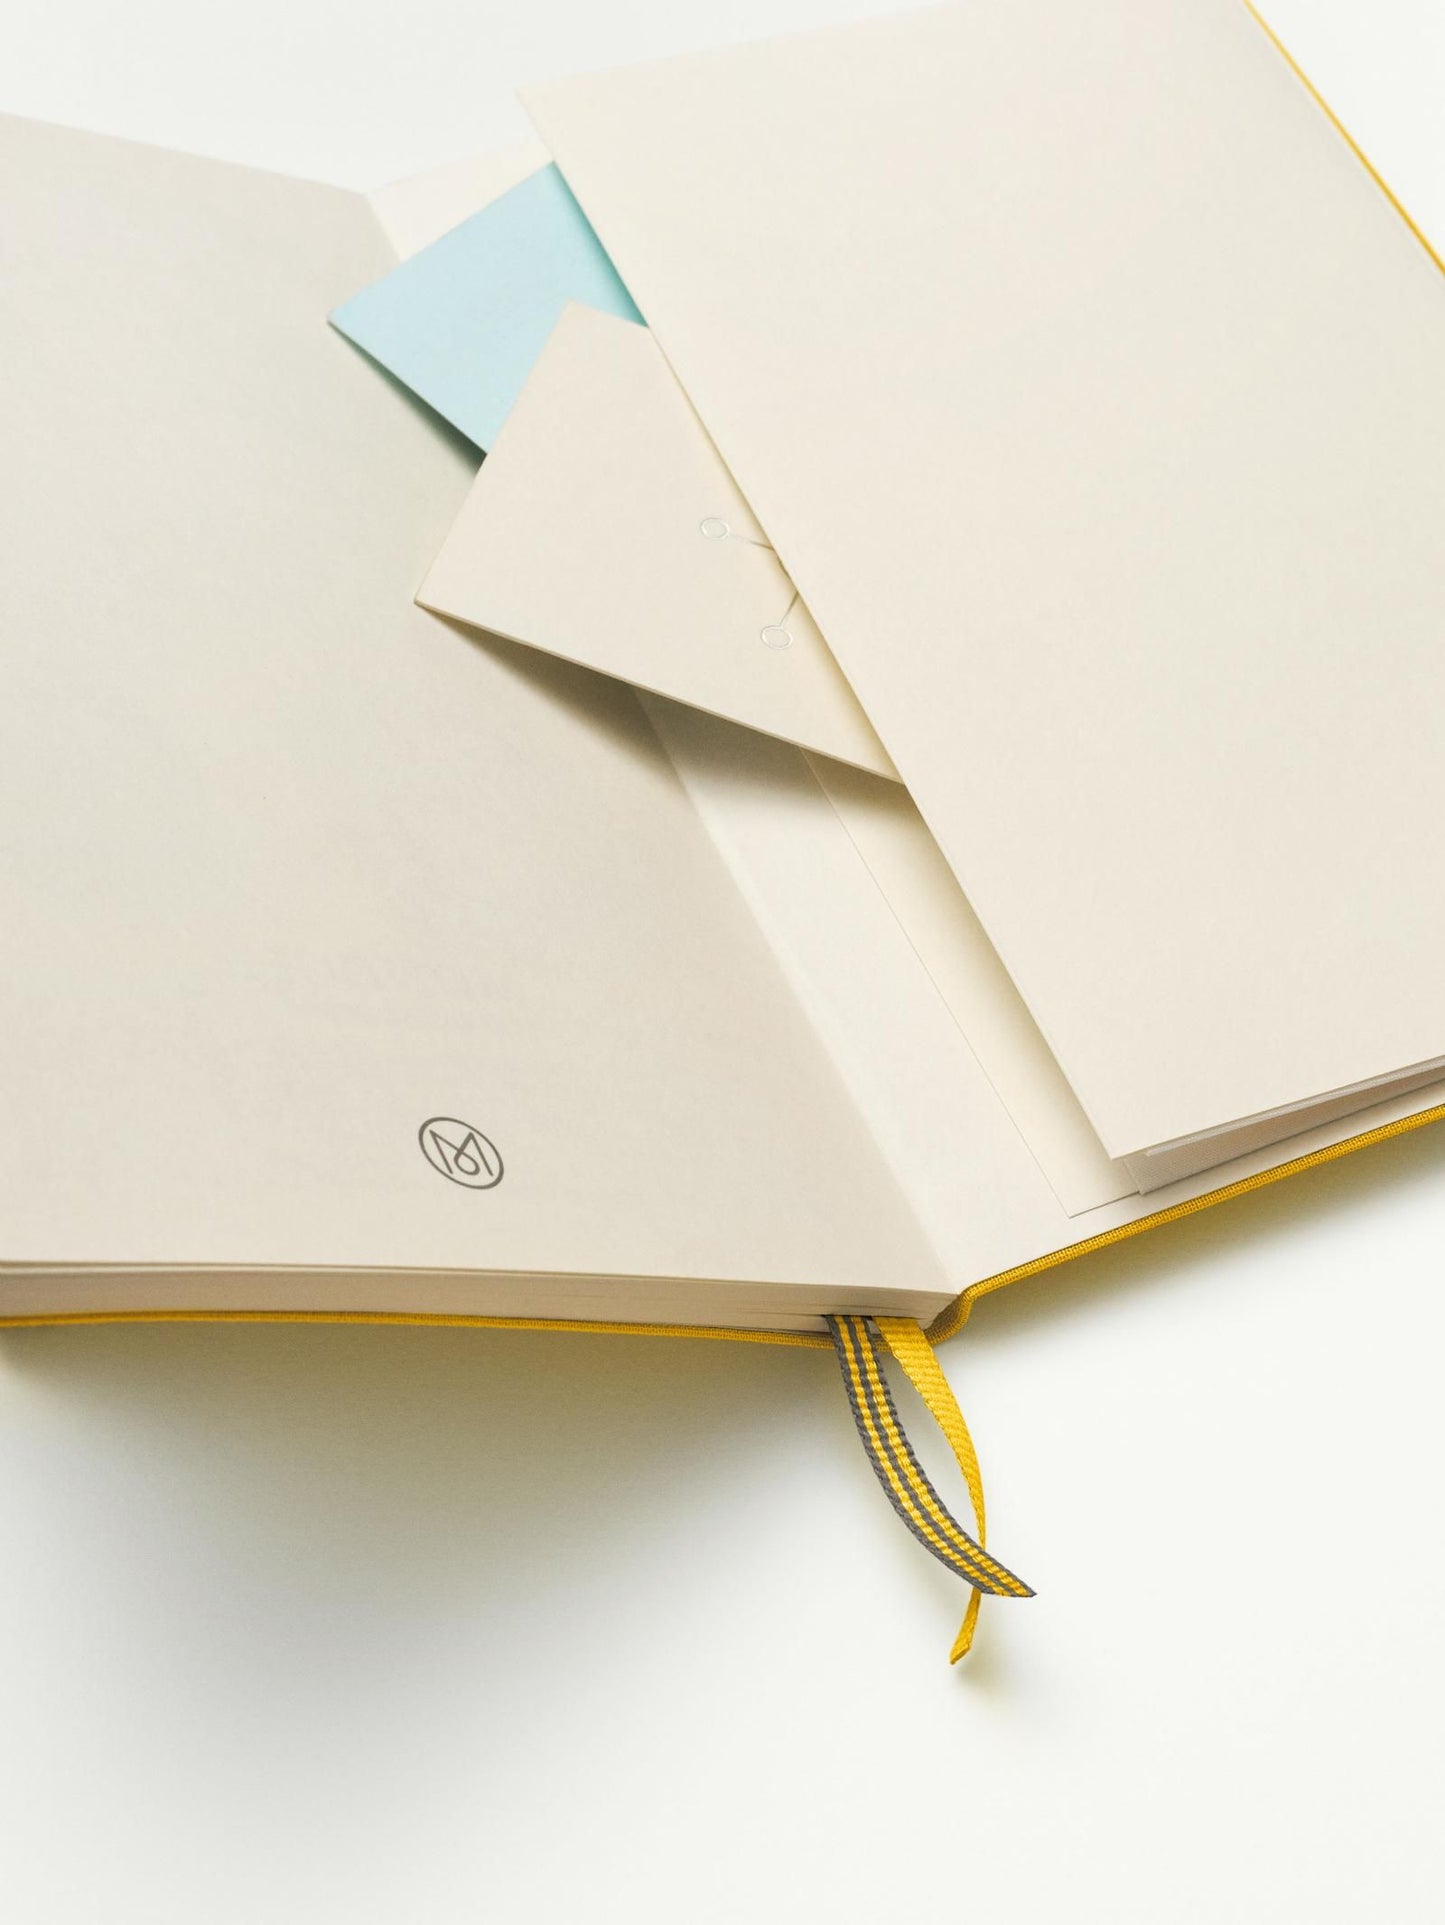 Monocle Hardcover Notebook B5 - Light grey